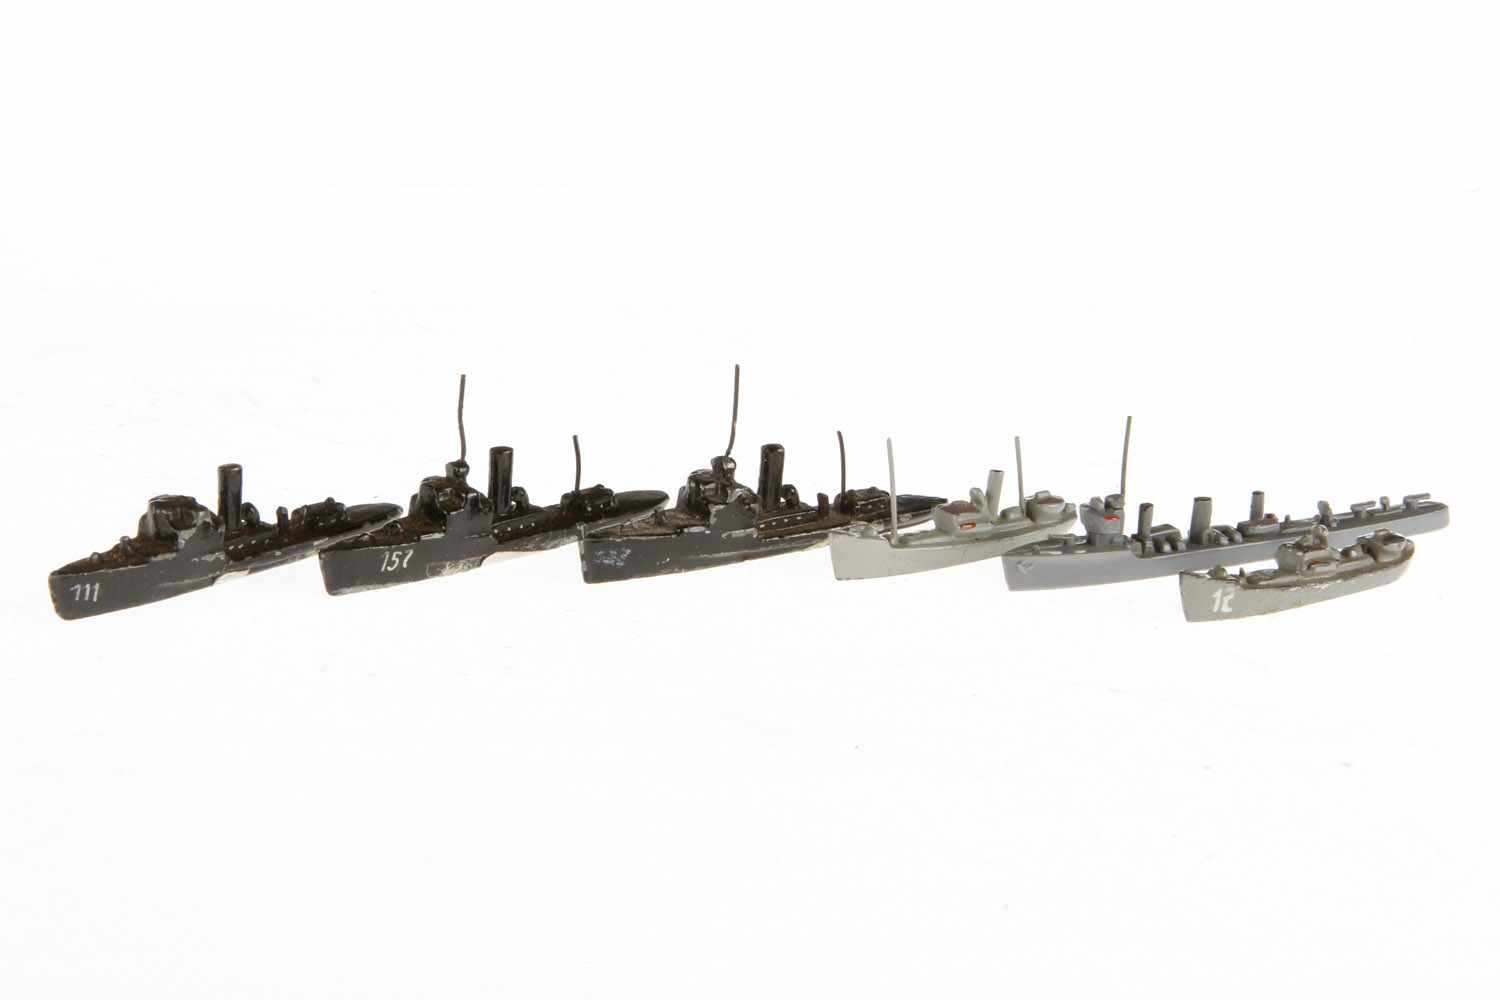 Konv. 6 Wiking Modellschiffe, Guss/Kunststoff: 3 Minensuchboote (111/157/112), Torpedoboot "Generali